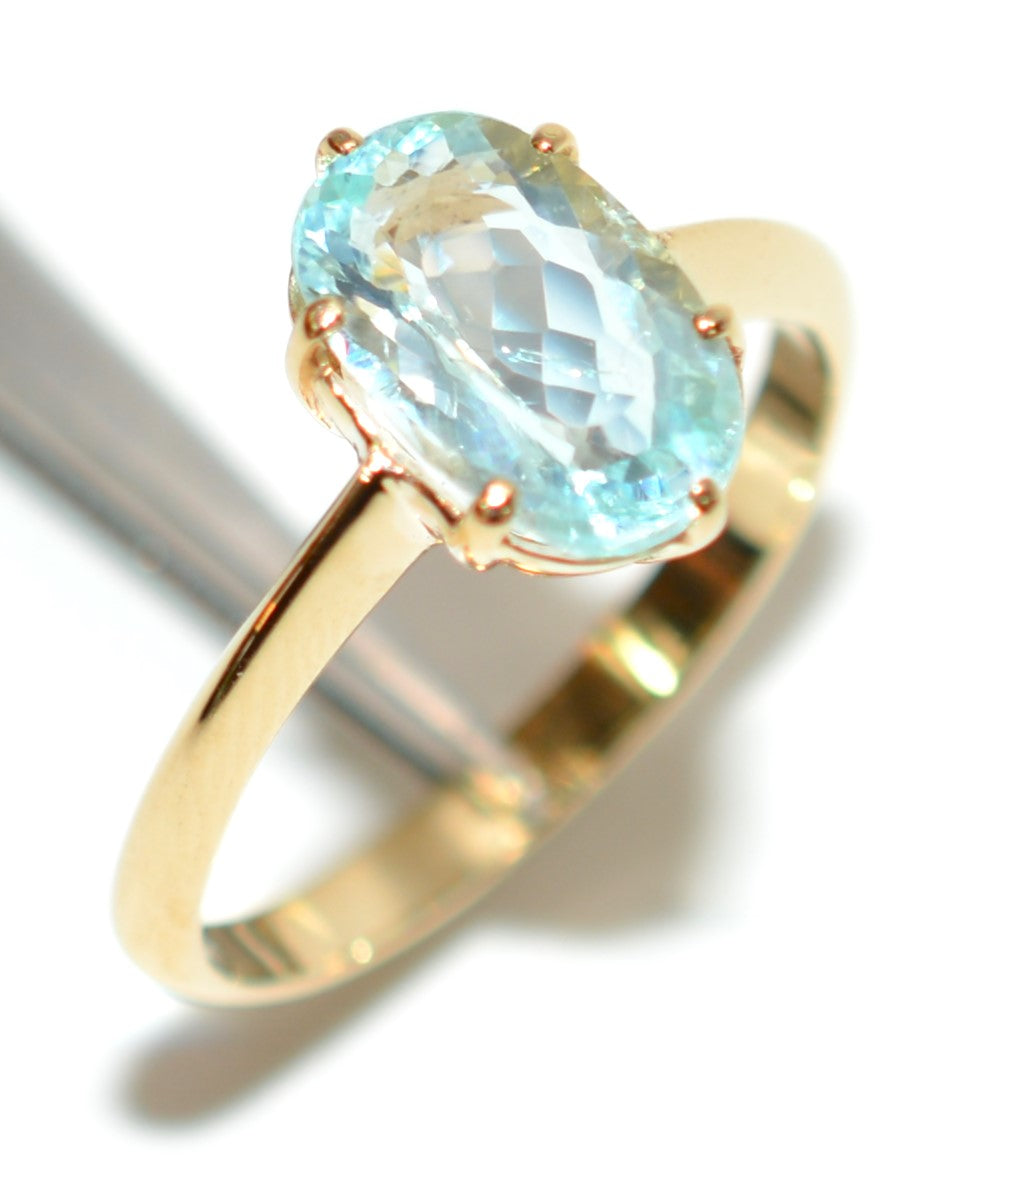 Certified Natural Paraiba Tourmaline Ring 14K Gold 1.91ct Solitaire Birthstone Statement Cocktail Ring Gemstone Engagement Ring Bridal Blue